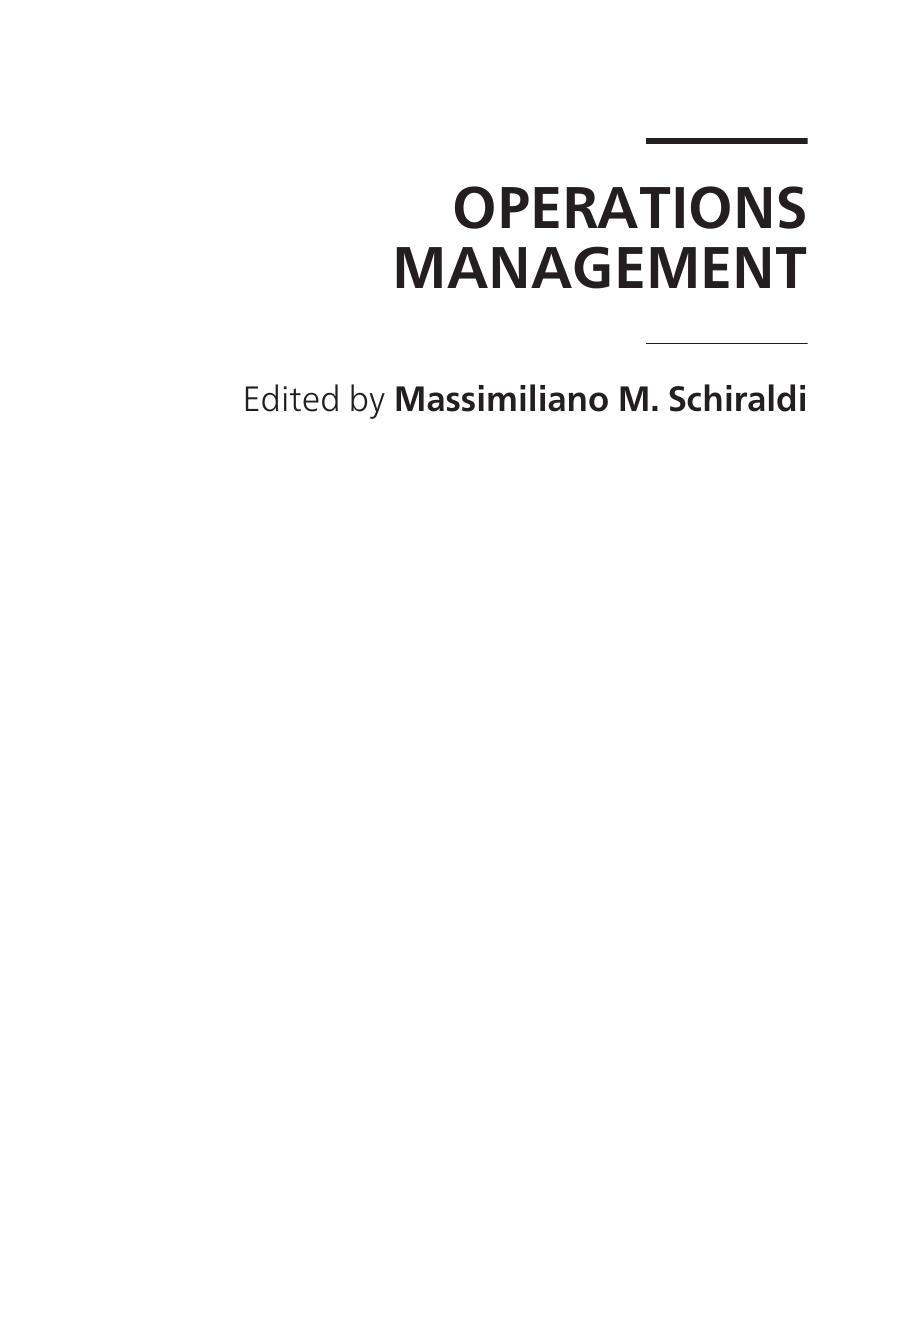 Operations Management 2013.pdf